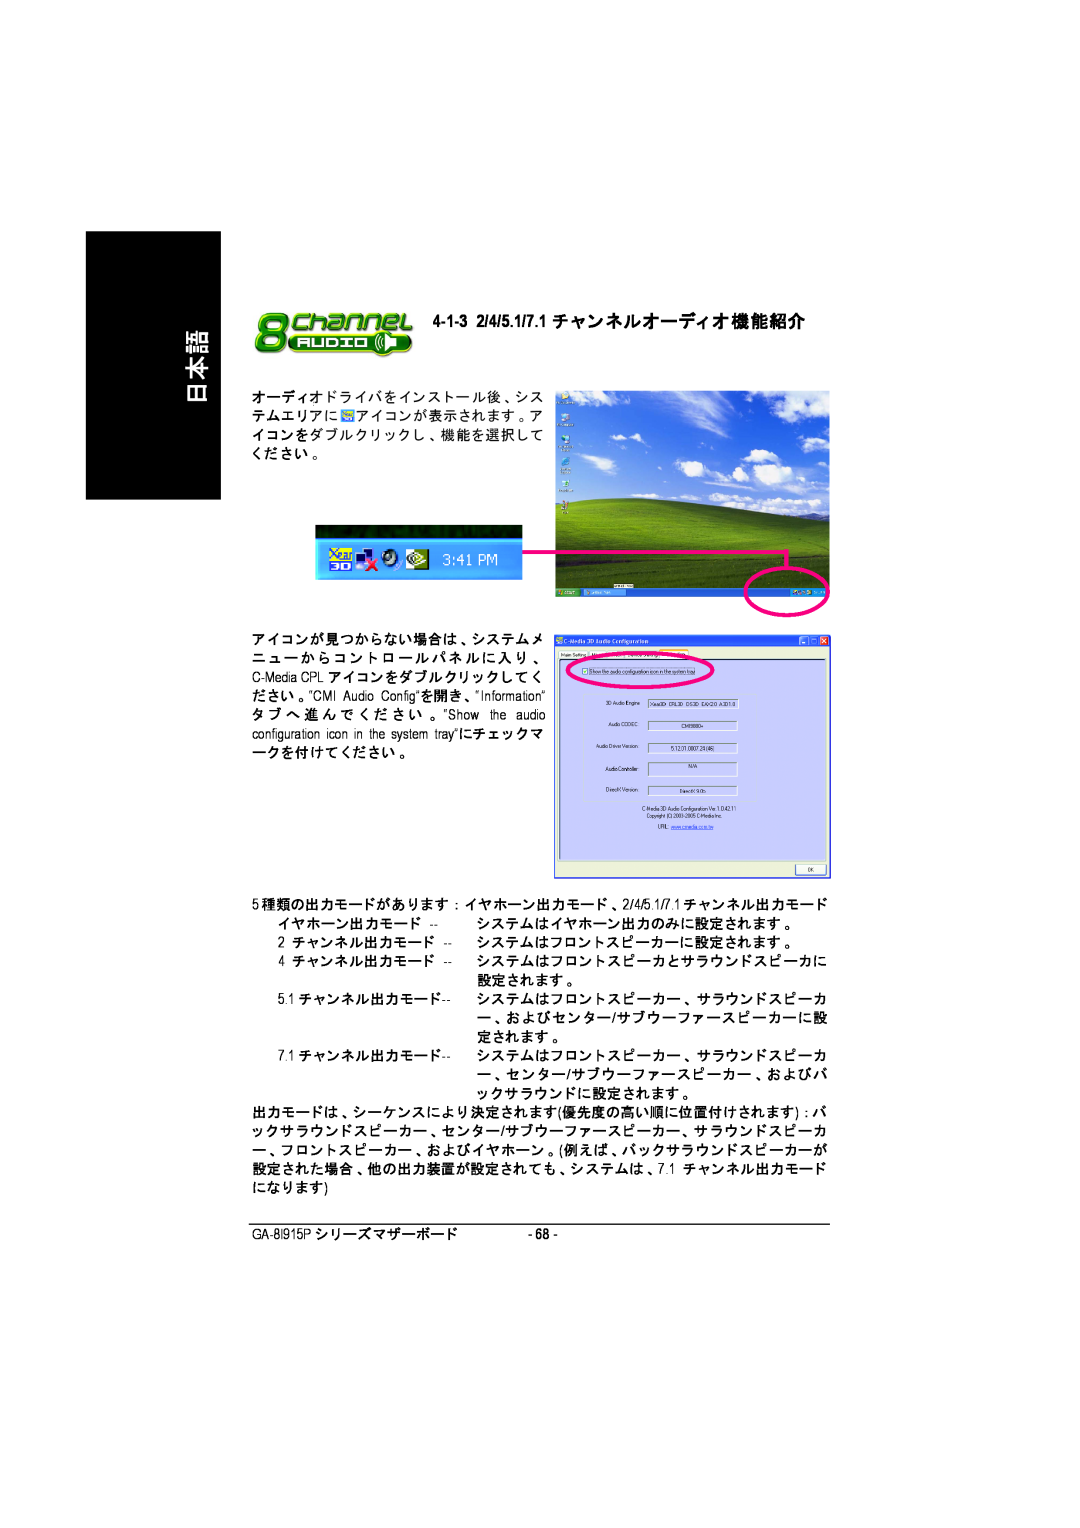 Intel GA-8I915P manual 4-1-3 2/4/5.1/7.1 チャンネルオーディ オ機能紹介 